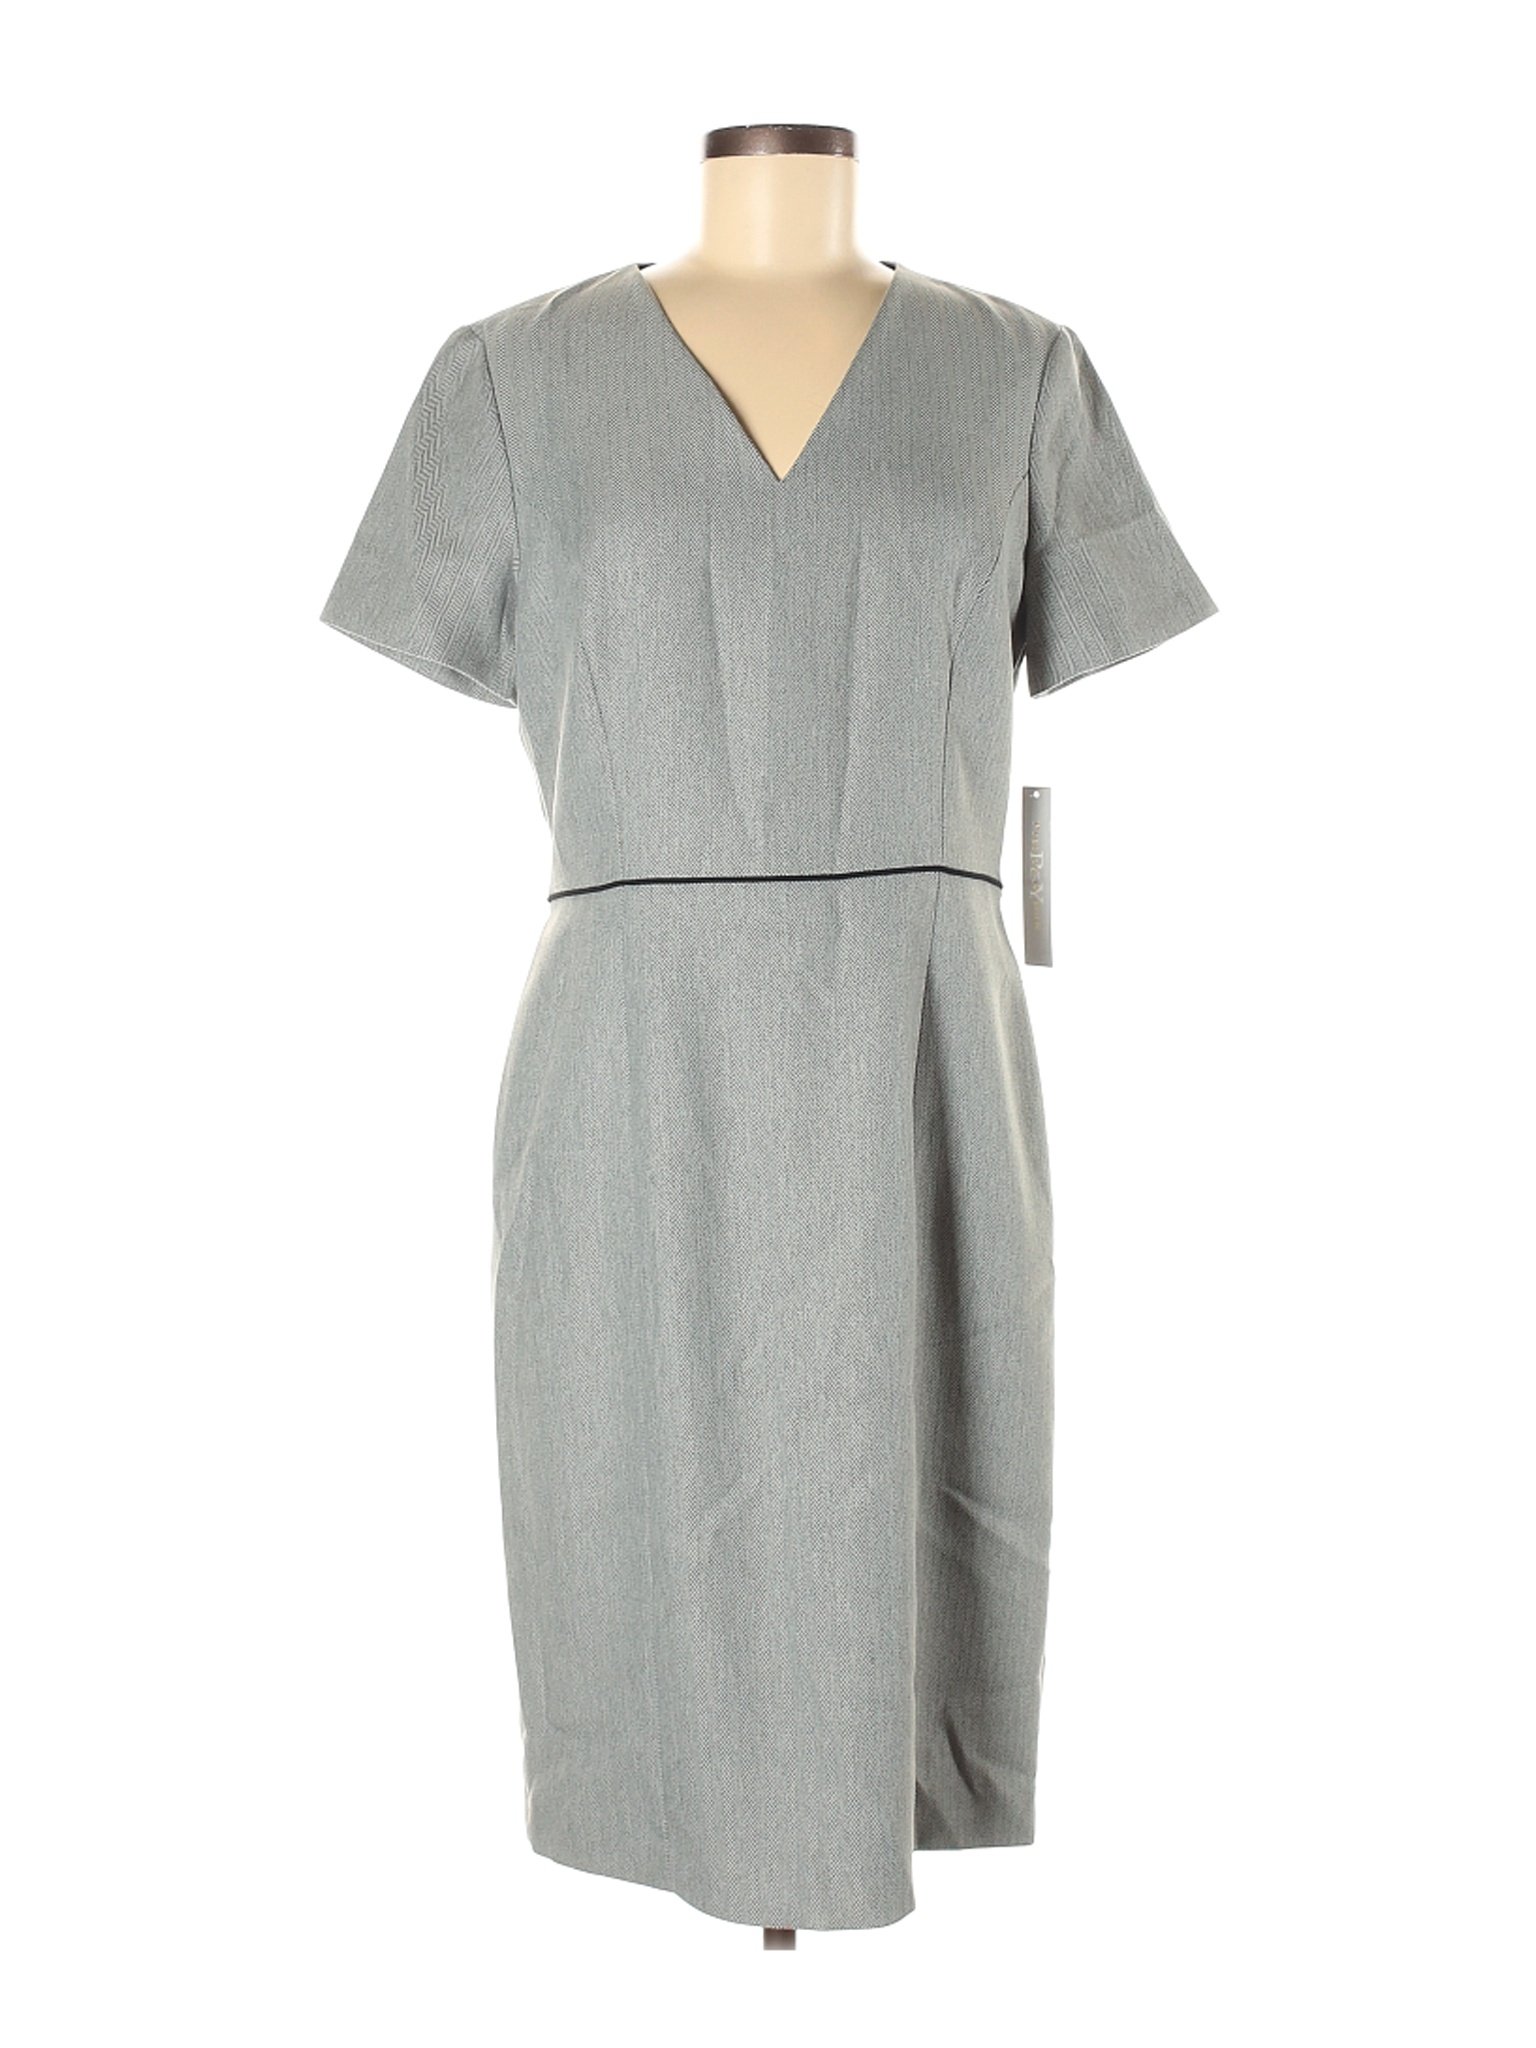 NWT Preston & York Women Gray Casual Dress 8 | eBay